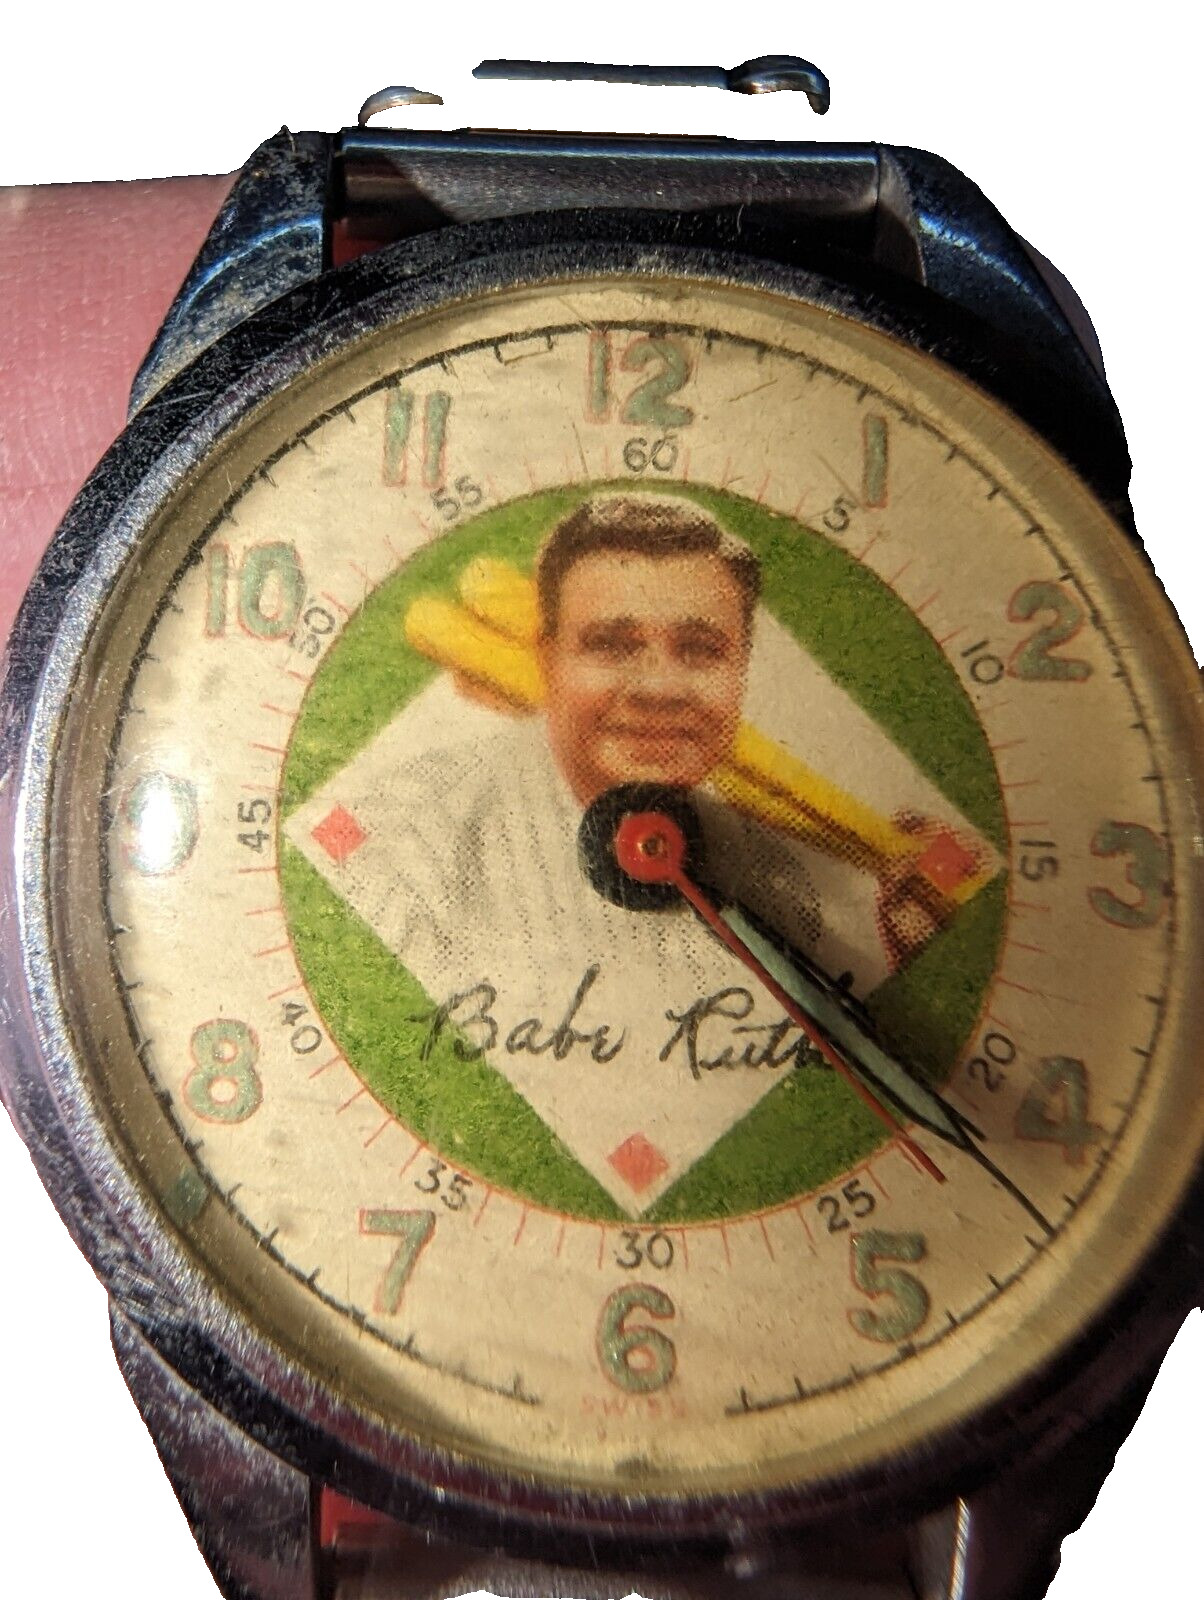 Babe Ruth Exacta Wrist Watch c. 1940s with Band Rare Collectible Baseball 1st Ed